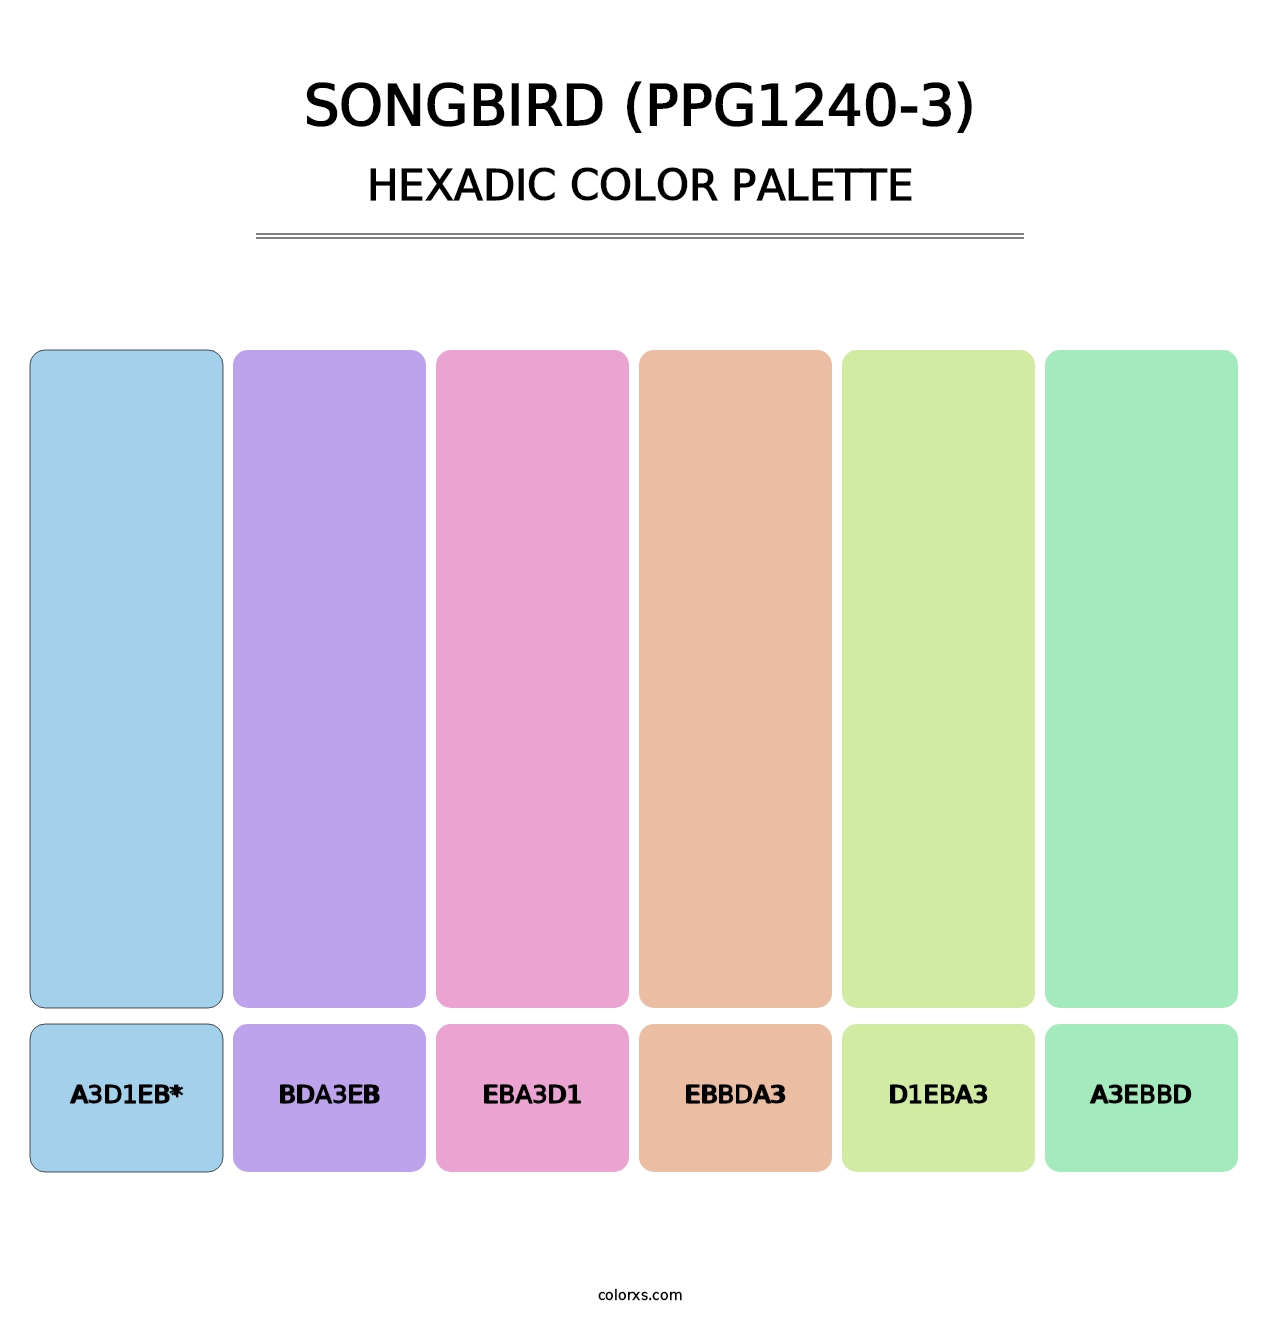 Songbird (PPG1240-3) - Hexadic Color Palette